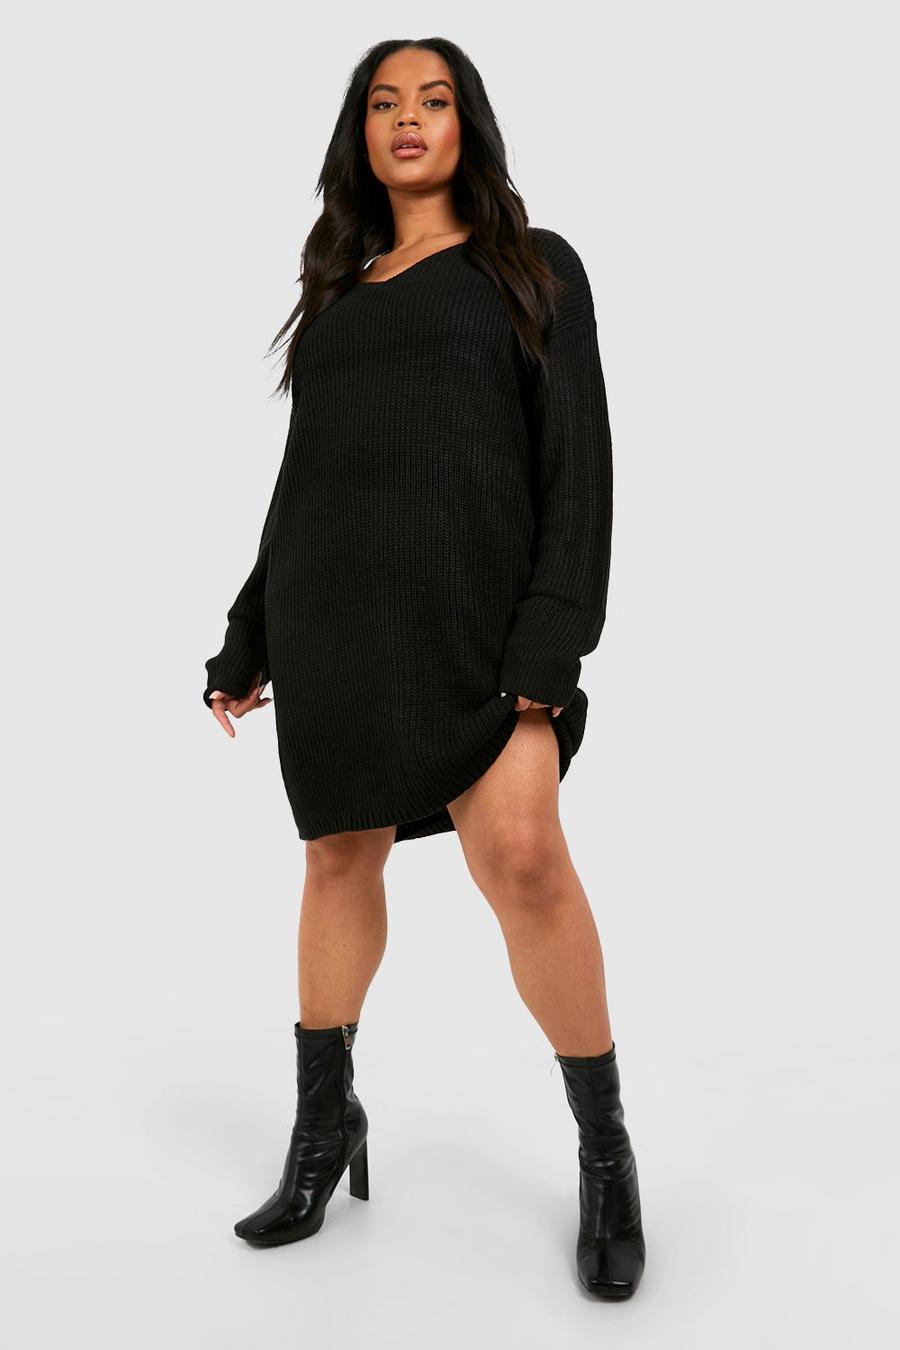 discount 63% Shana jumper Brown XL WOMEN FASHION Jumpers & Sweatshirts Fur 